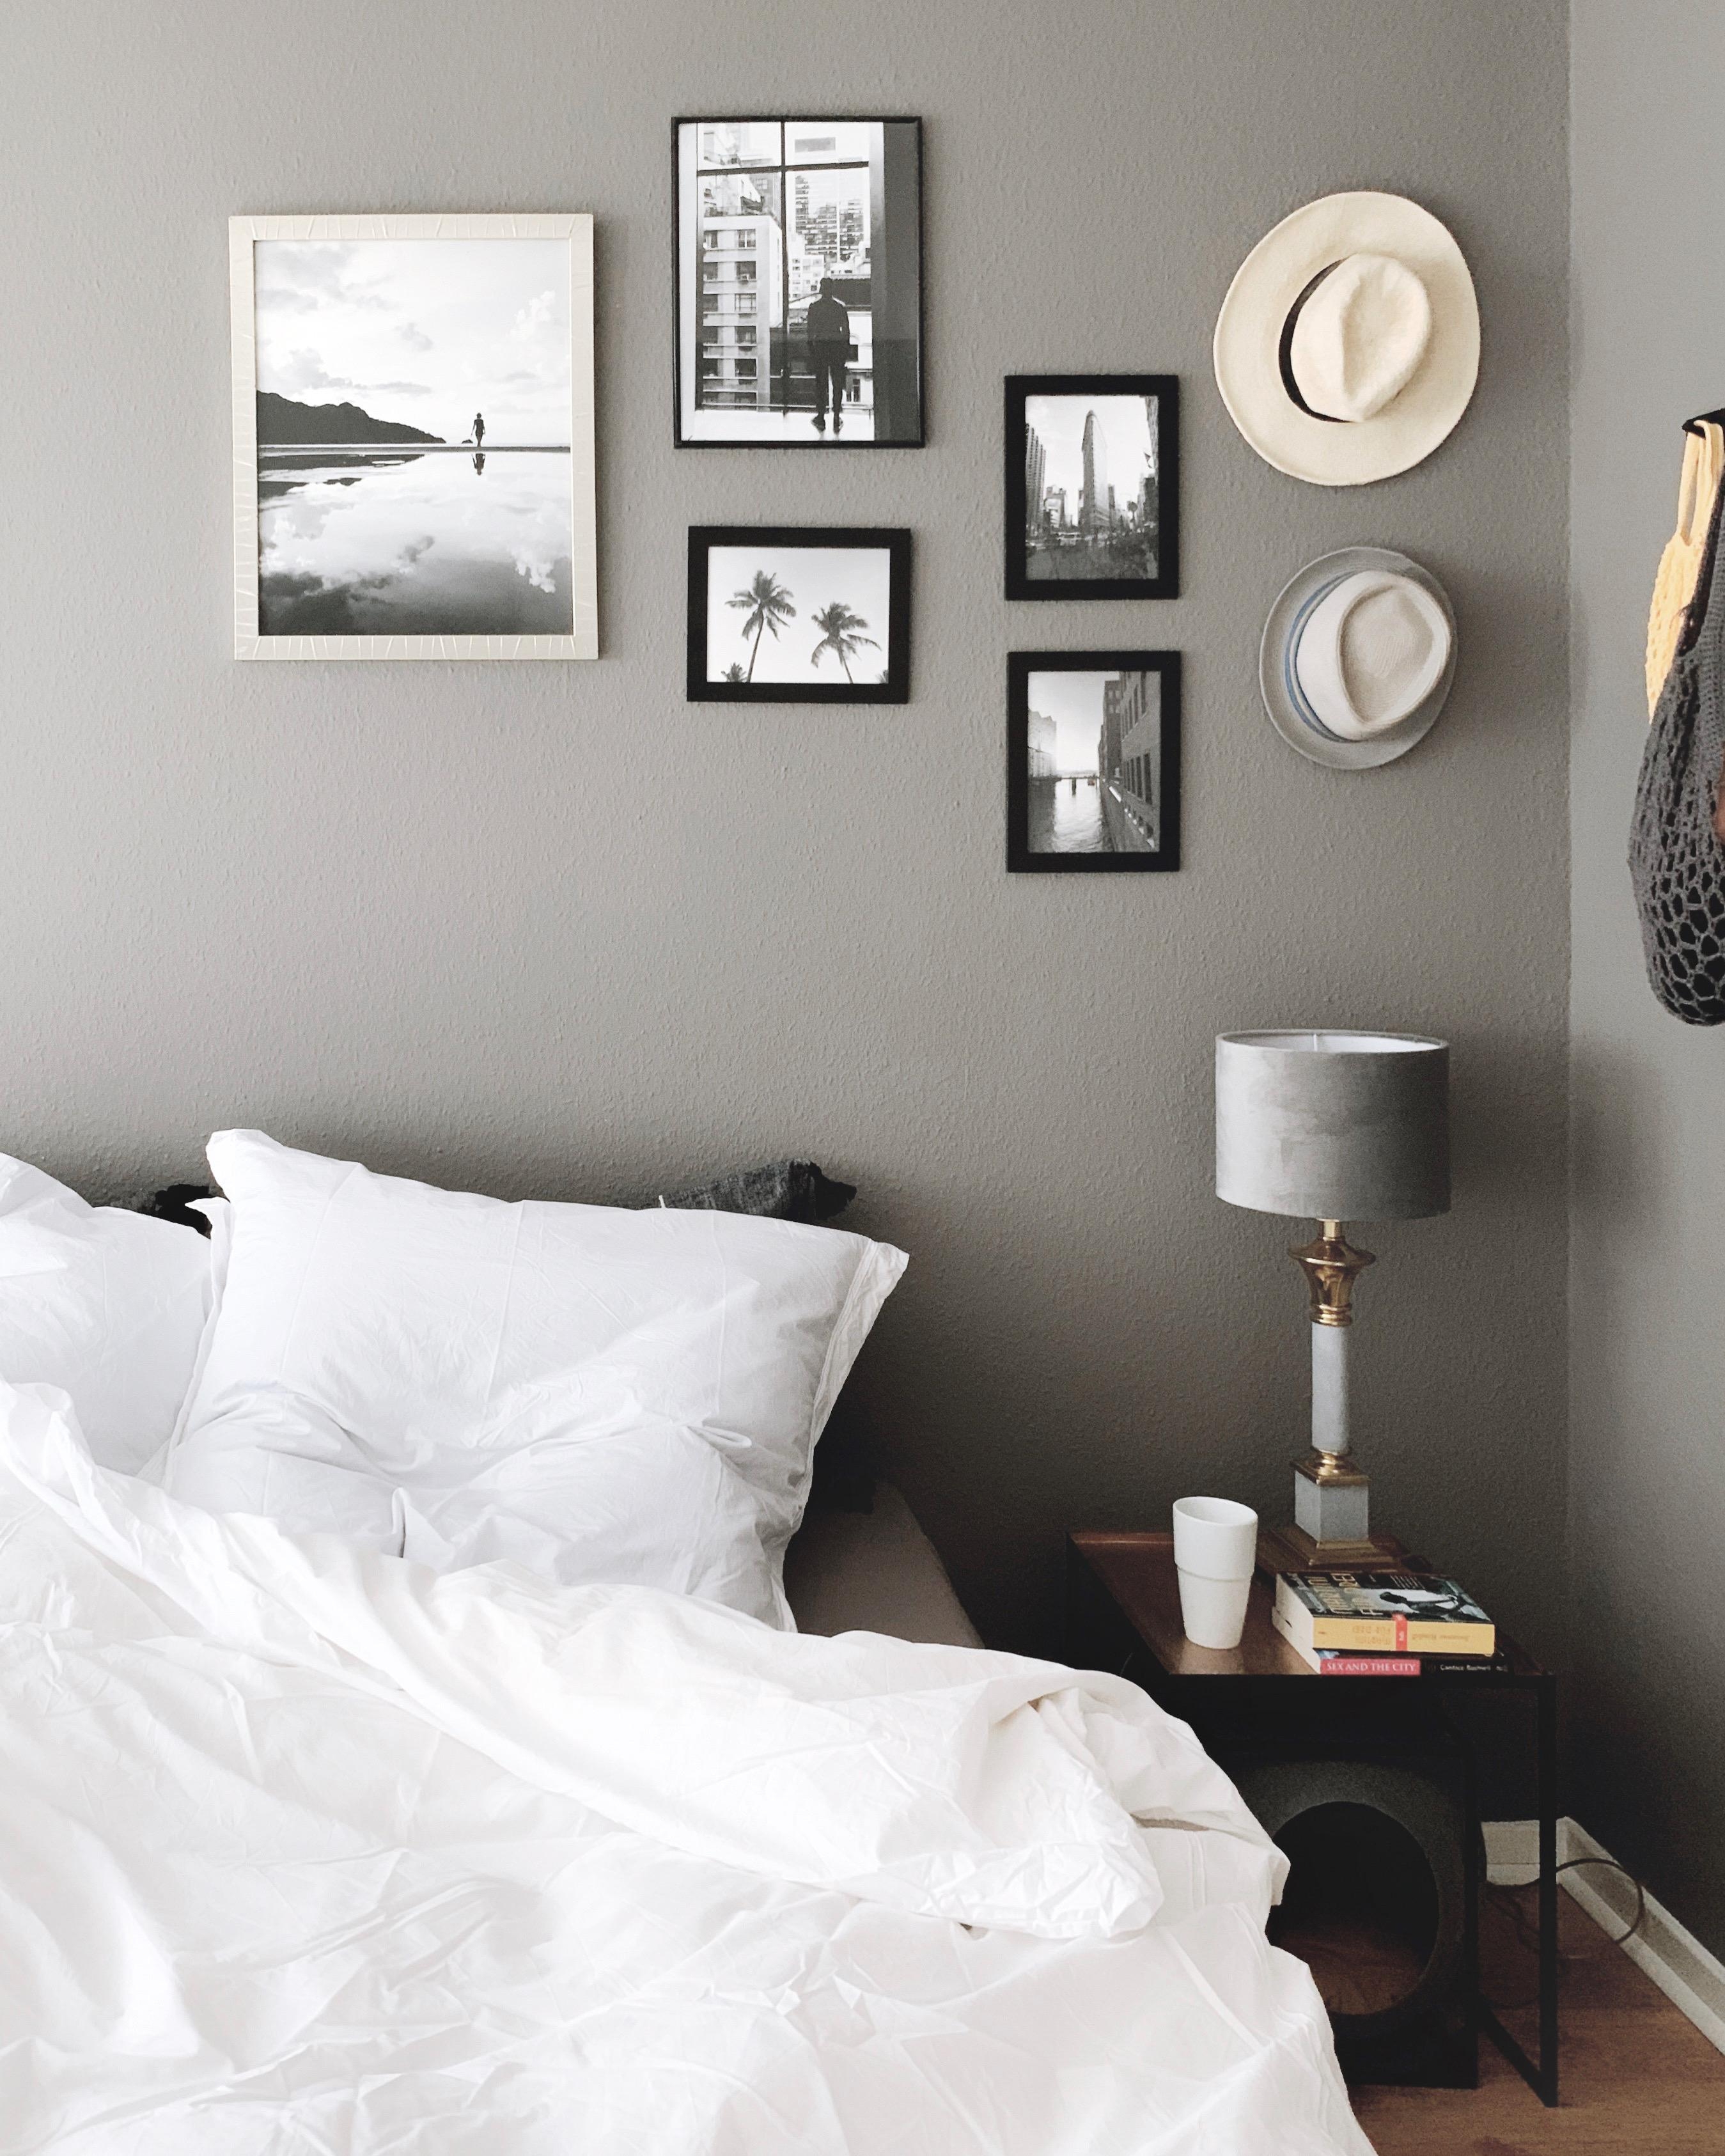 Bedroom
#bedroom #bedroominspo #hygge #monochrome #interior #nordichome #nordicroom #scandinaviandesign